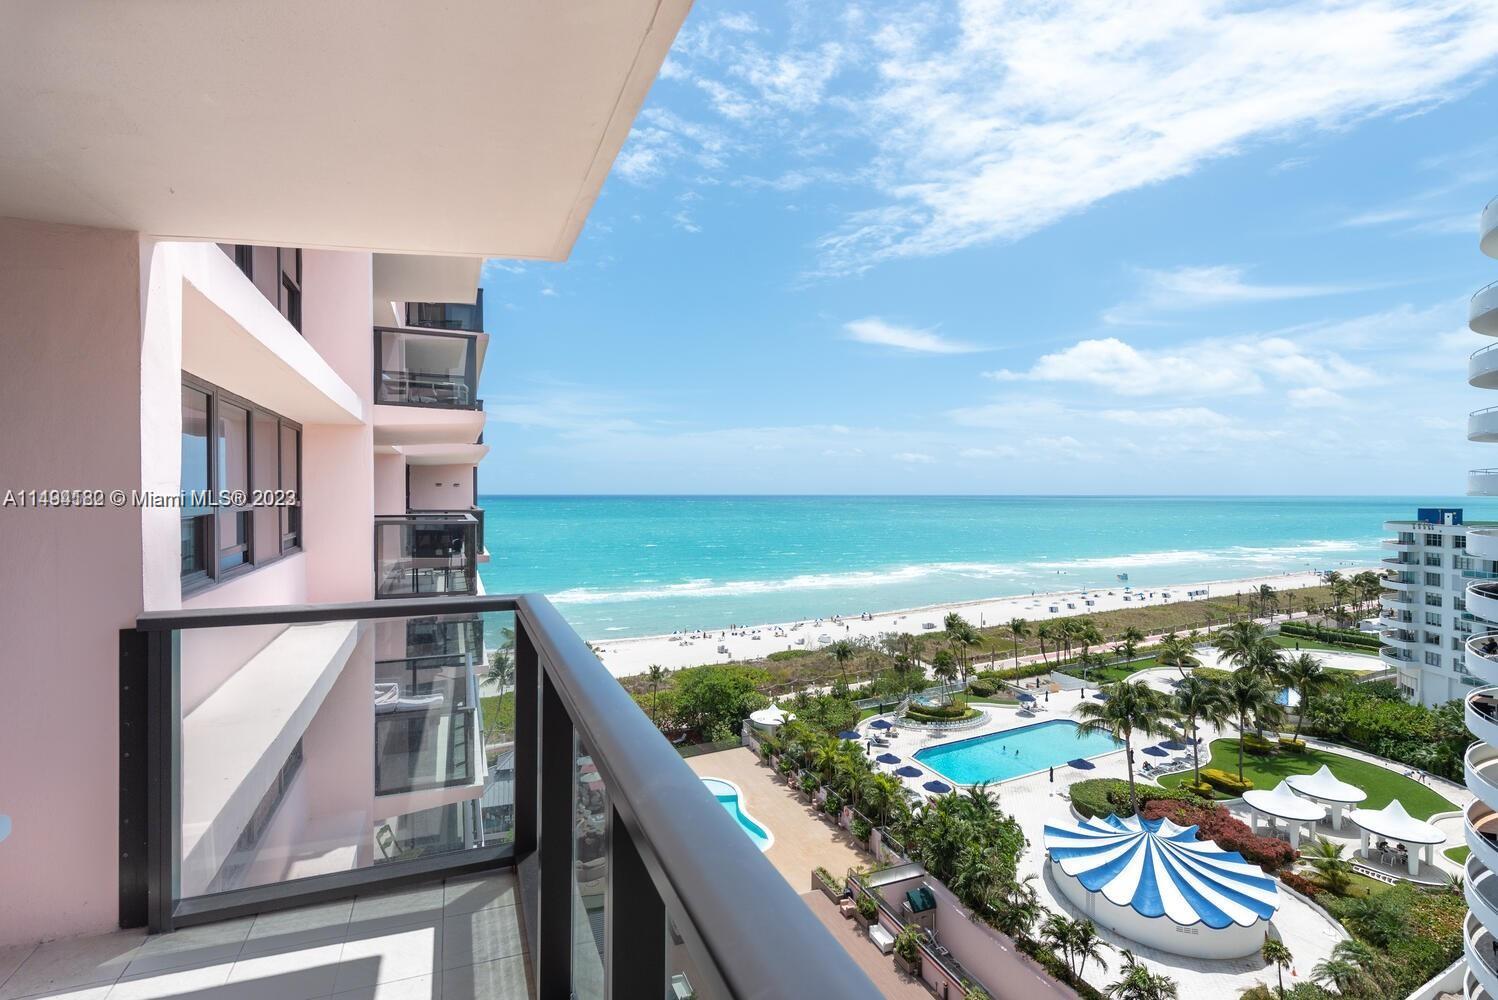 Rental Property at 5225 Collins Ave 1205, Miami Beach, Miami-Dade County, Florida - Bedrooms: 2 
Bathrooms: 2  - $4,250 MO.